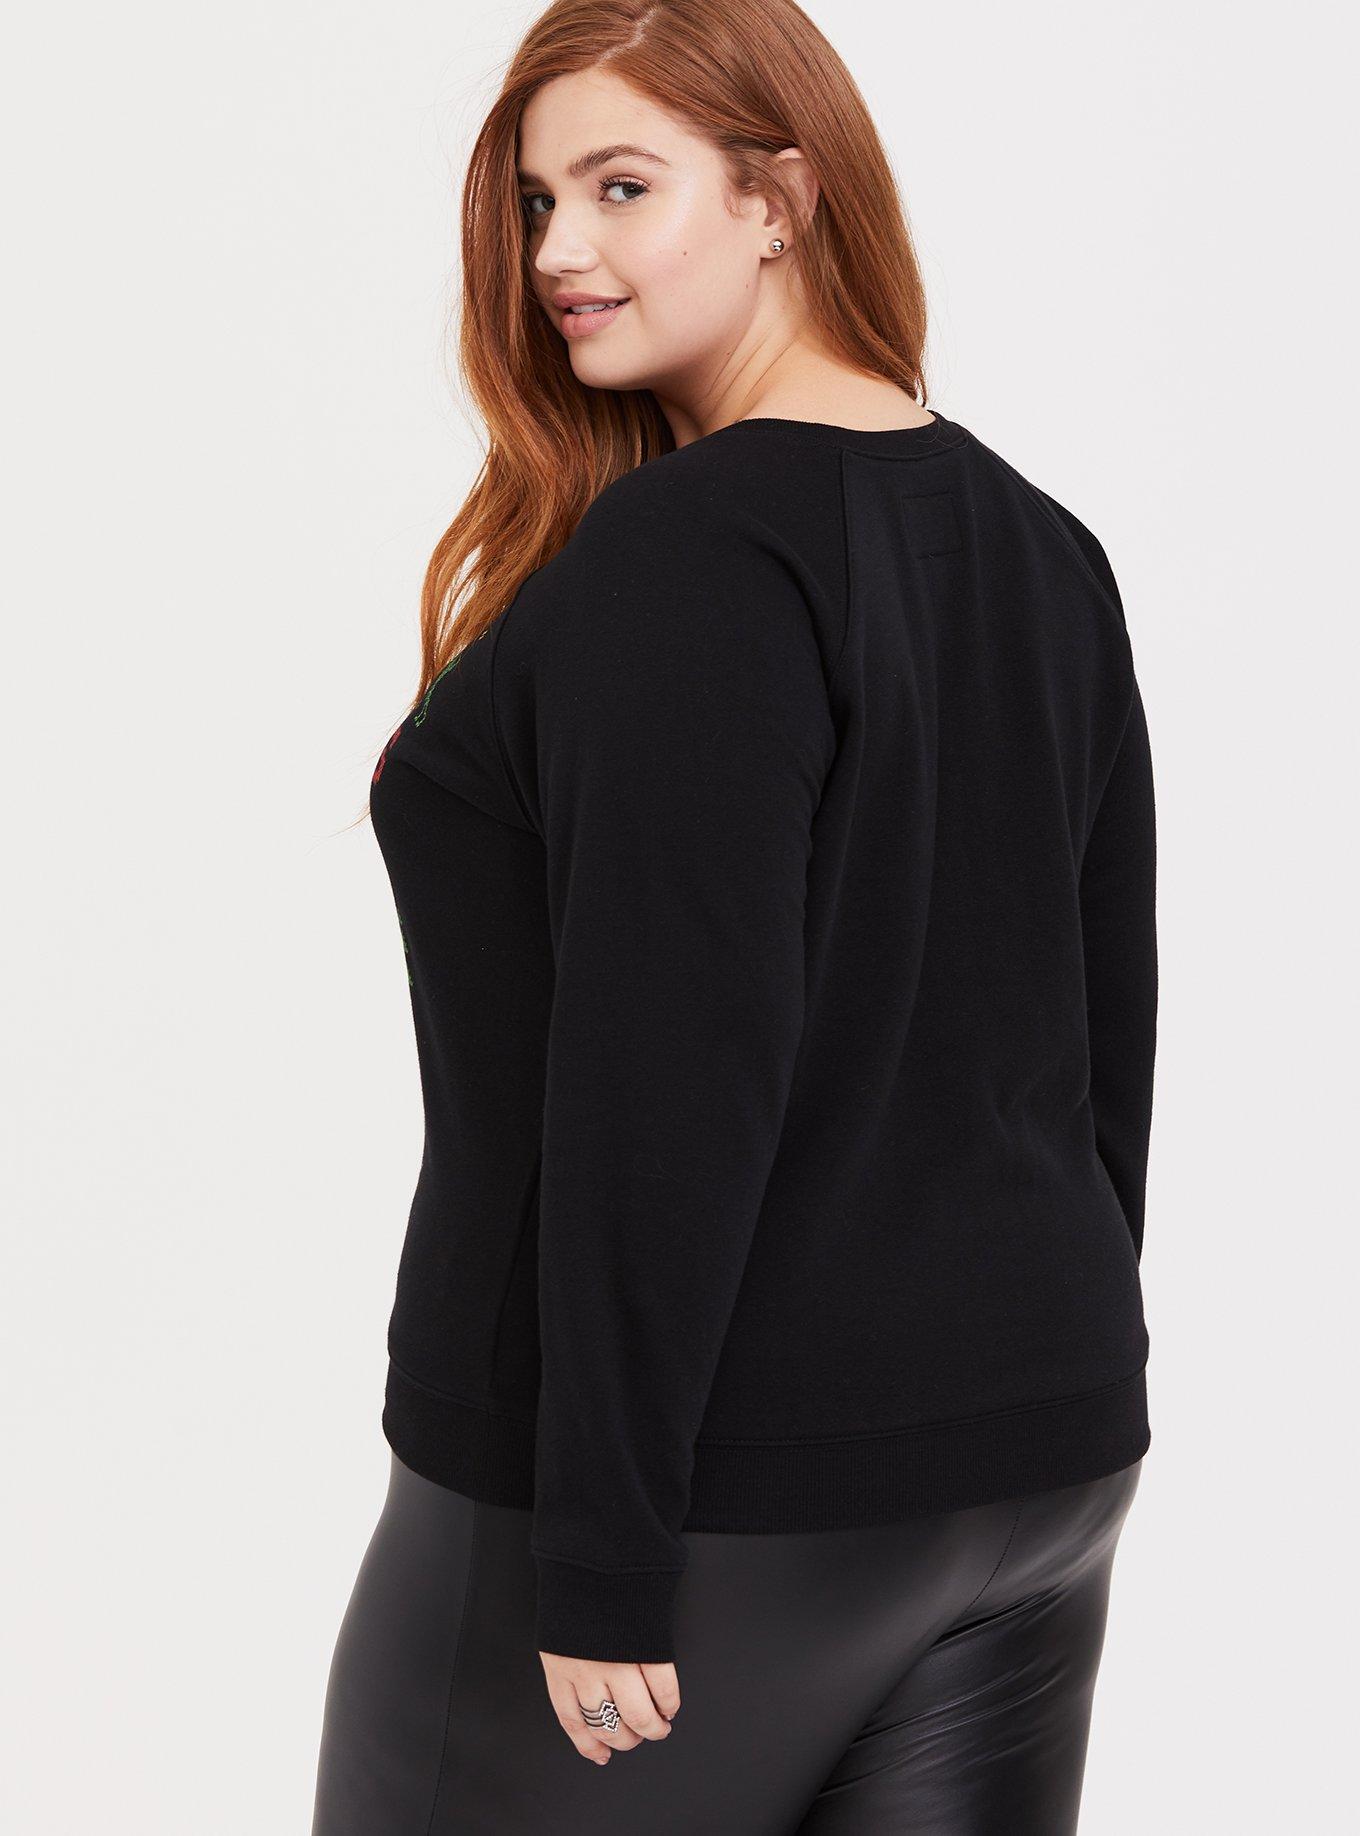 Plus Size - Home Alone Black Raglan Holiday Sweatshirt - Torrid